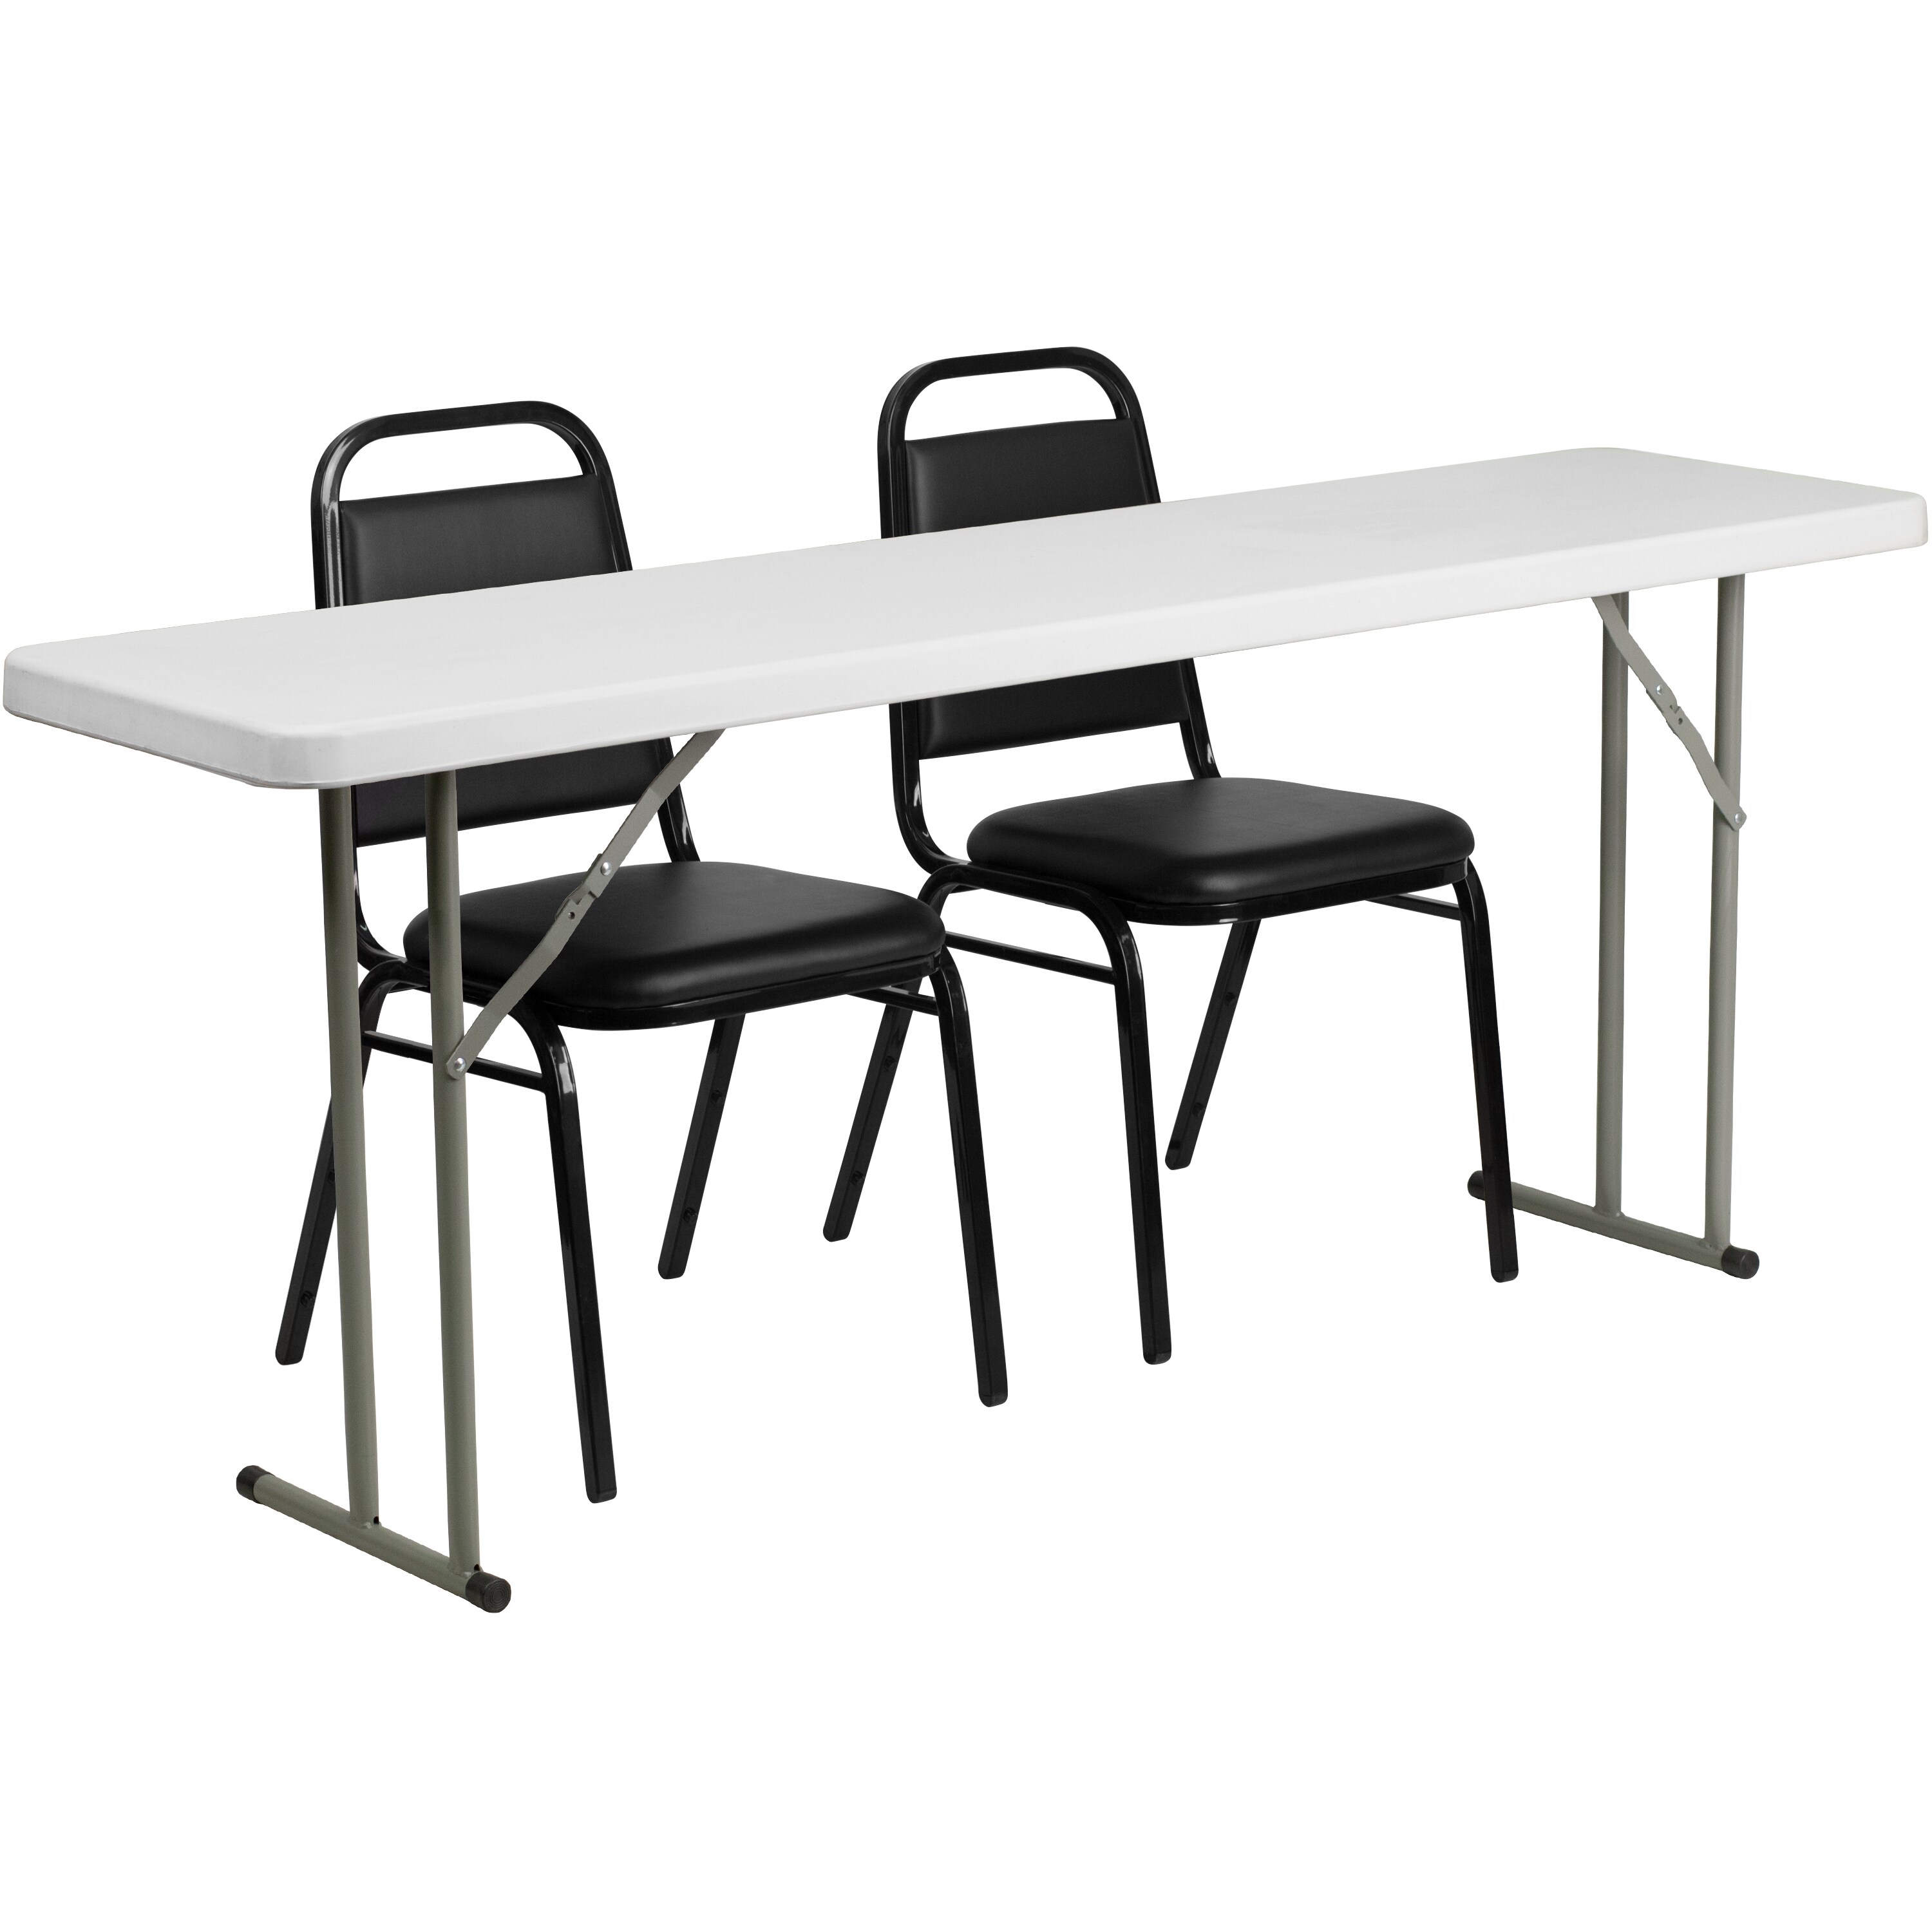 Flash Furniture 18 x 72 Plastic Folding Training Table White 2 Pack